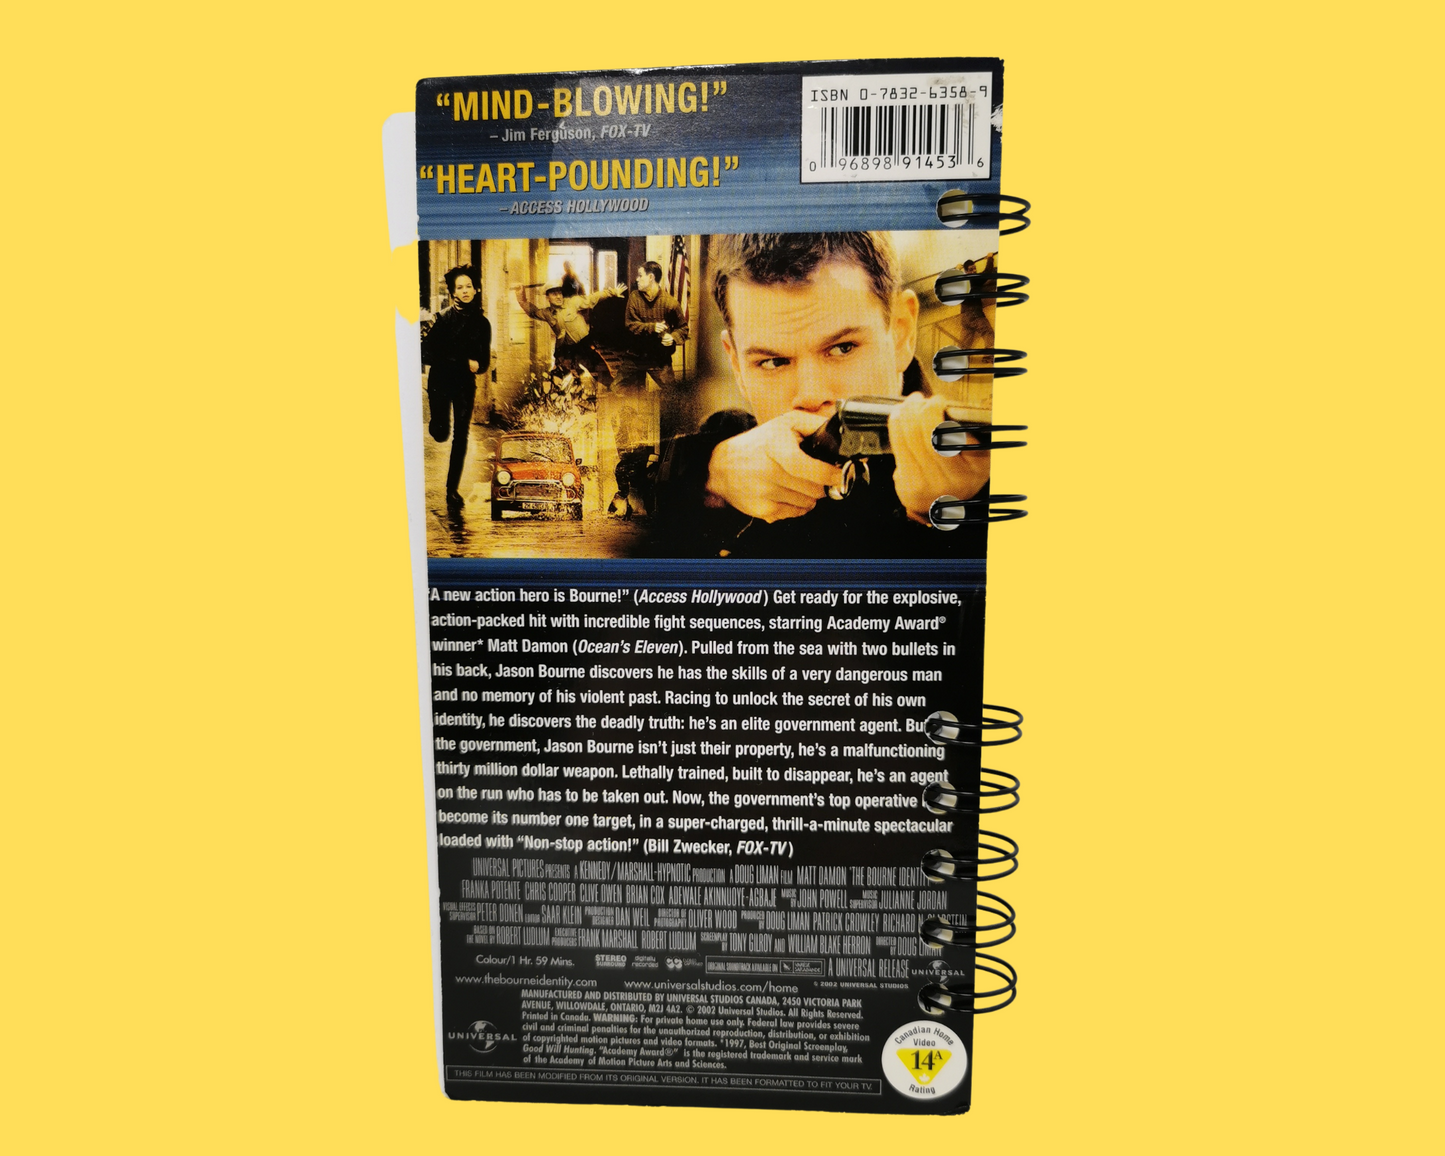 Carnet de film VHS The Bourne Identity